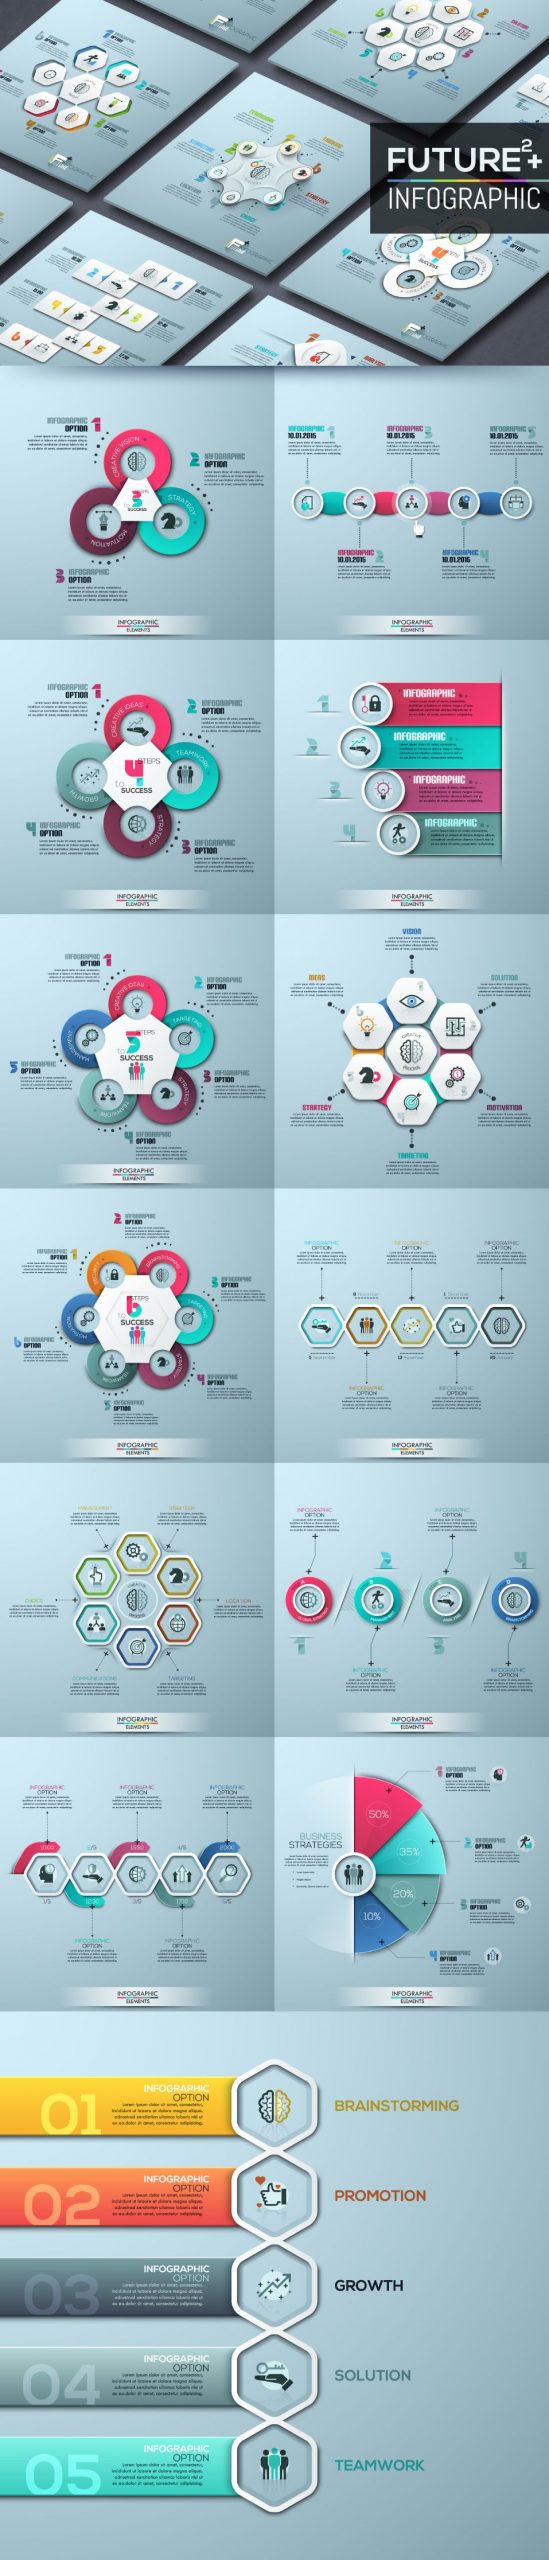 infographic elements
